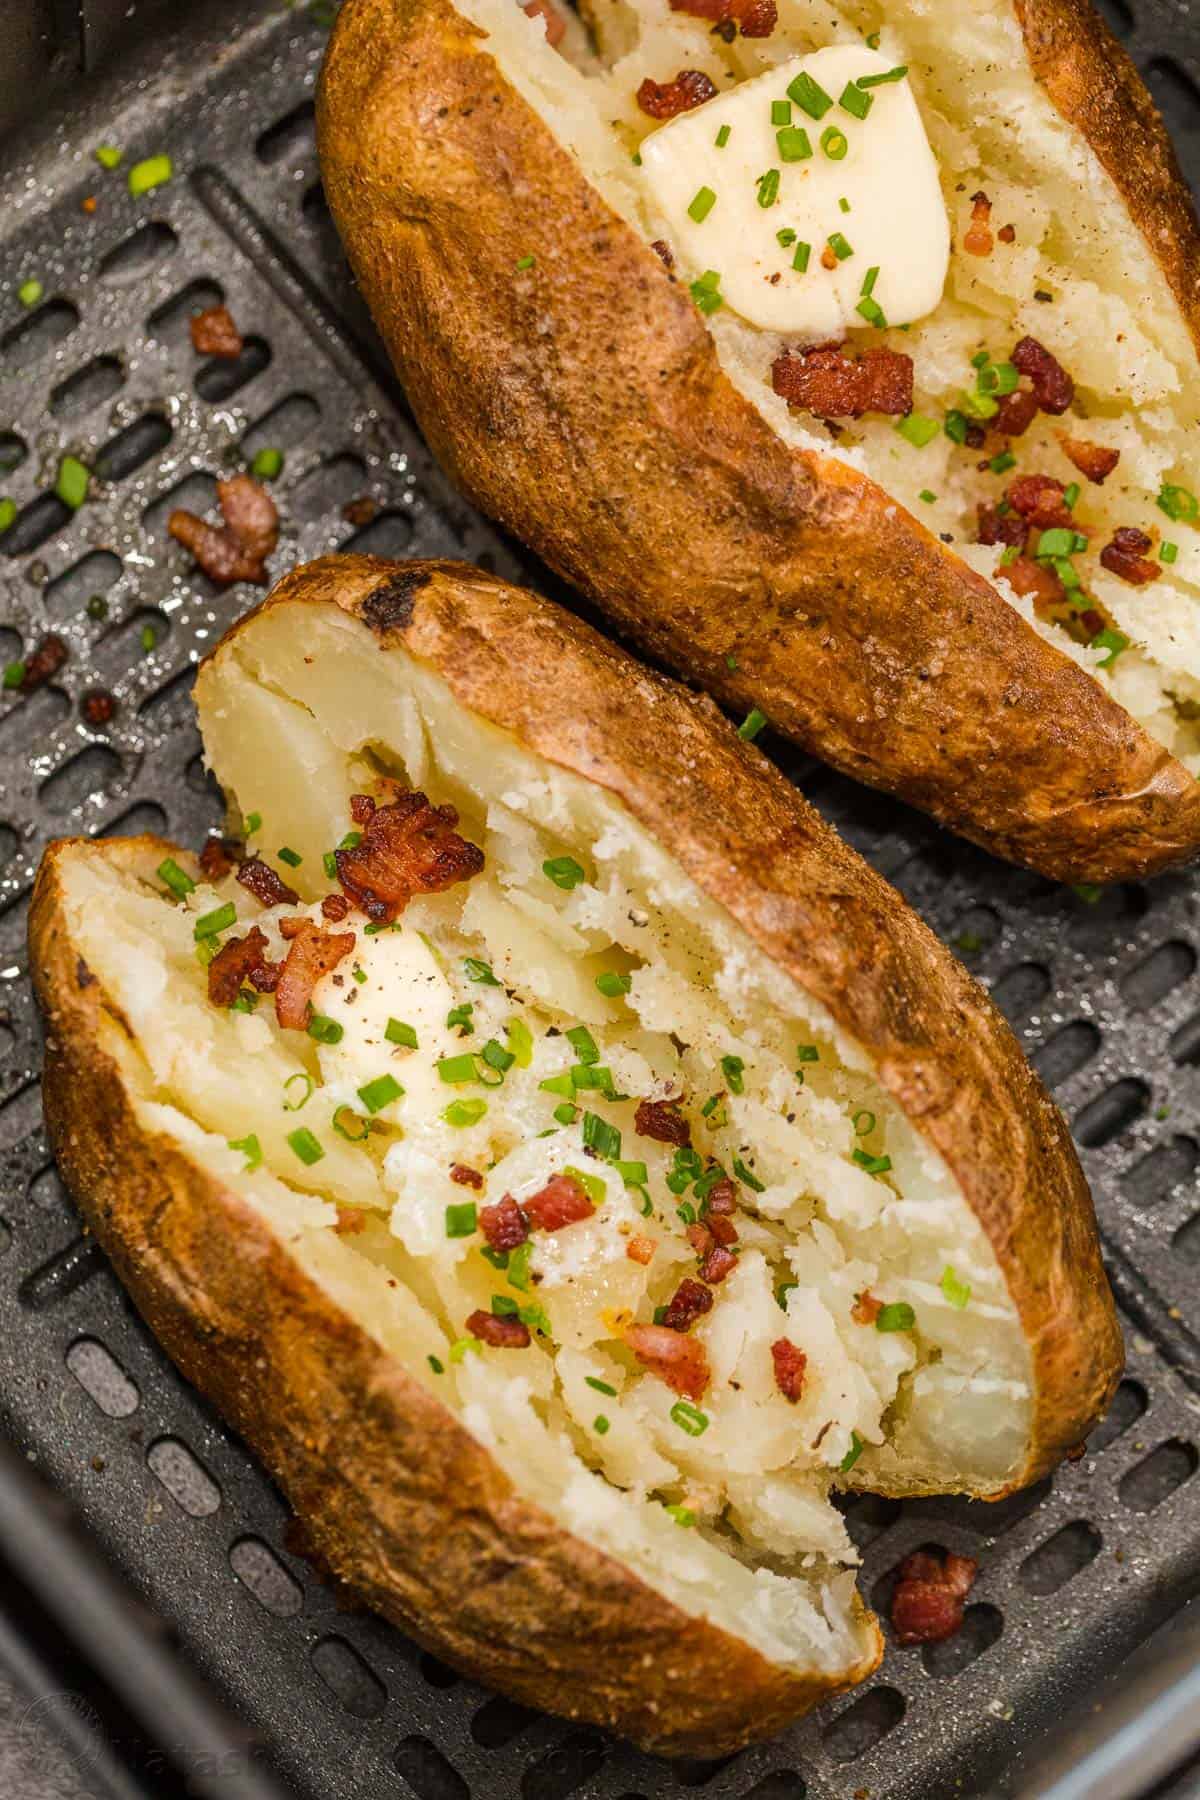 Fail-proof air fryer baked potatoes